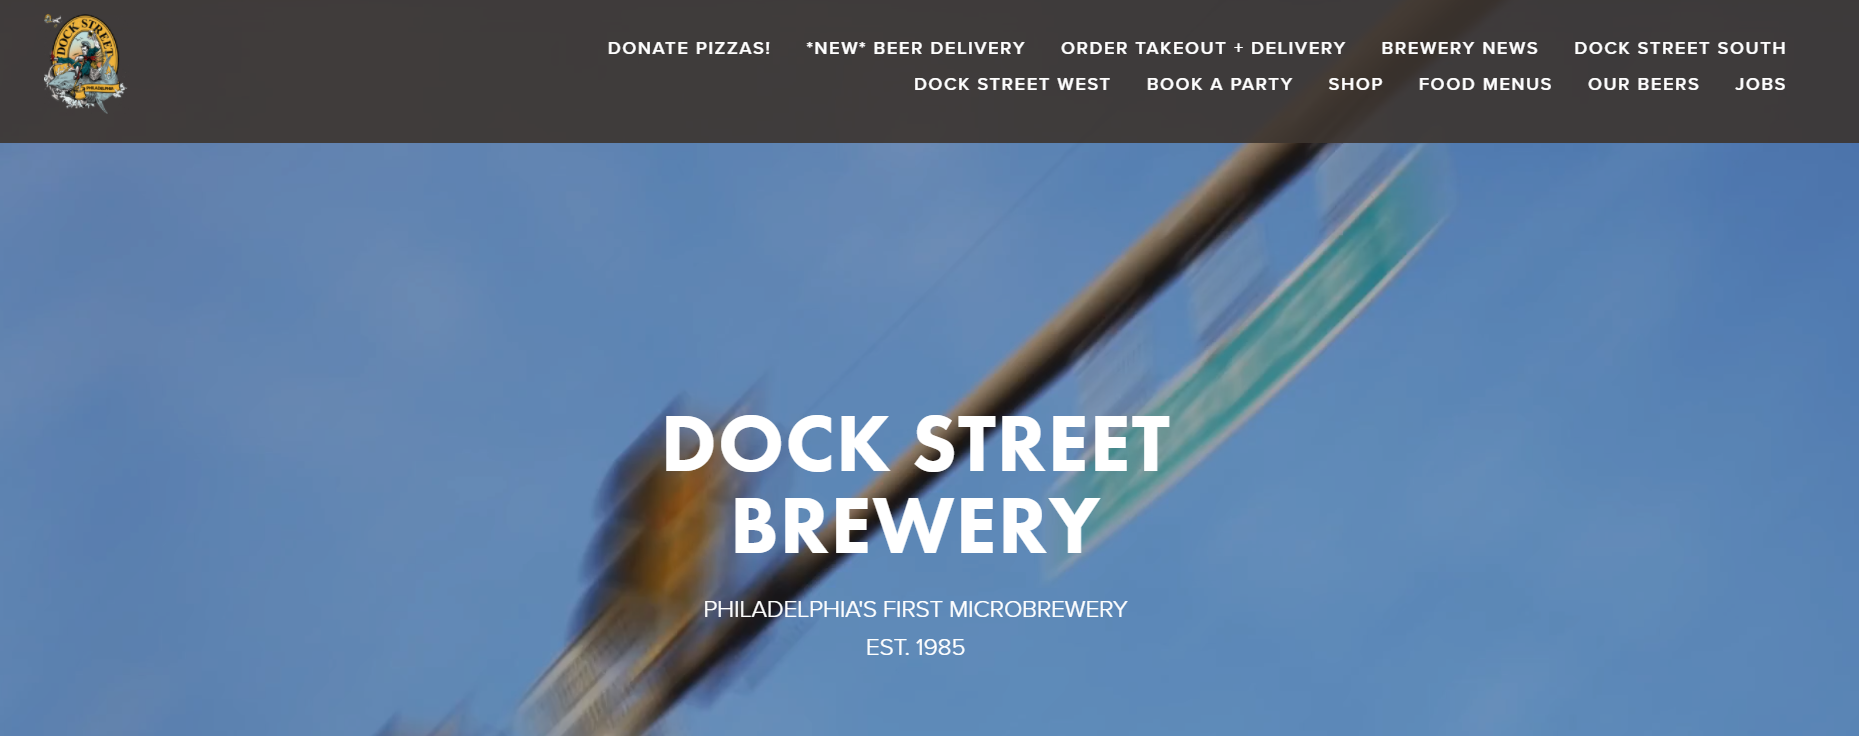 Dock Street Brewery